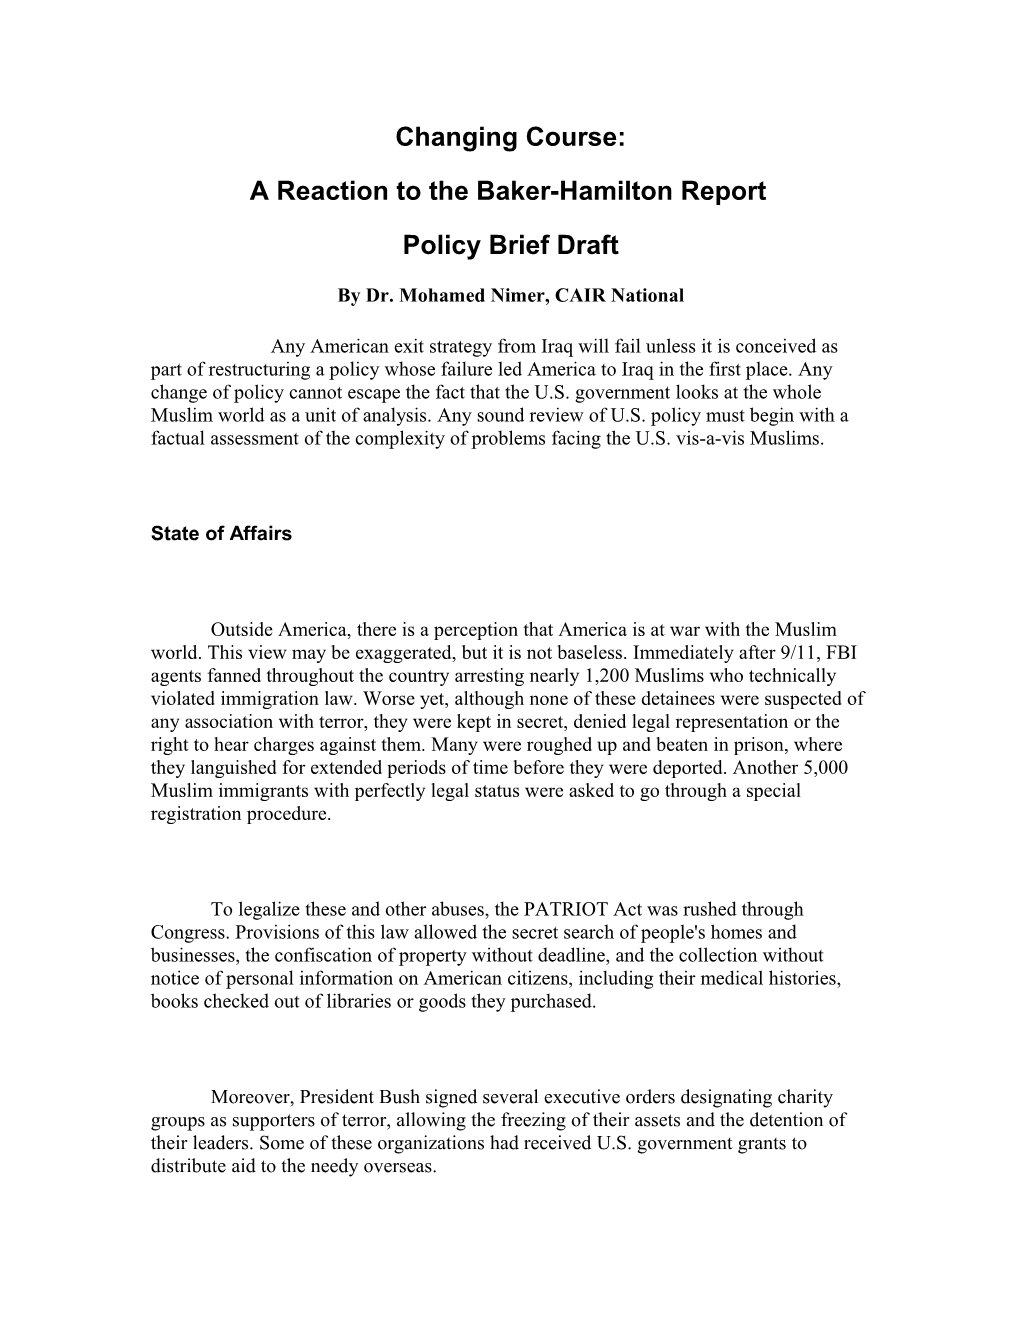 A Reaction to the Baker-Hamilton Report